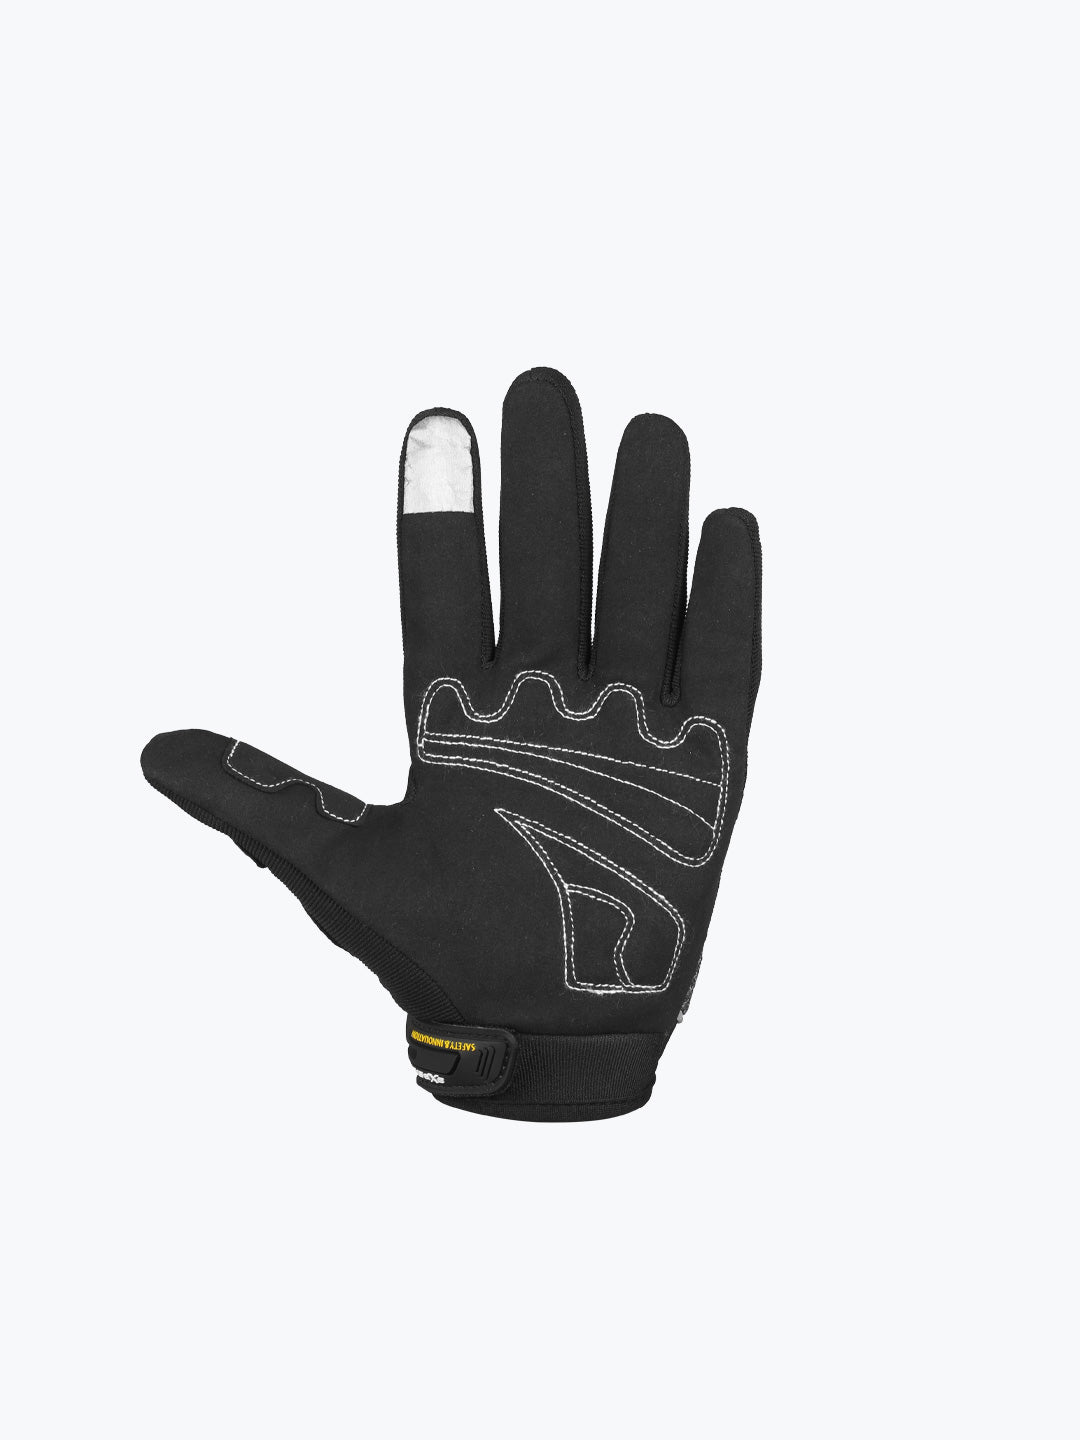 AXE Racing Gloves St09 Black